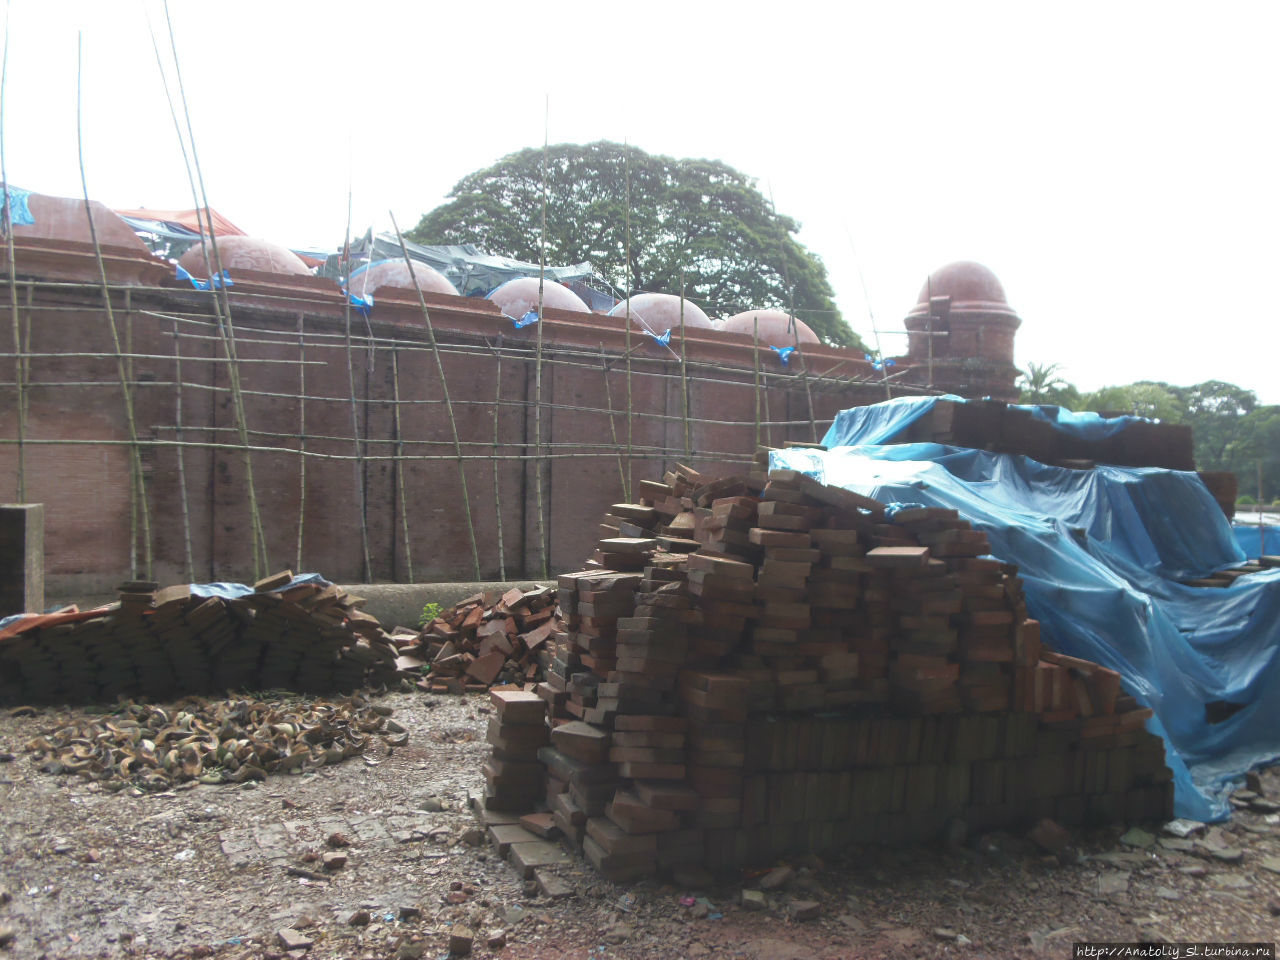 Активно идет реставрация — ремонт мечети. Багерхат, Бангладеш